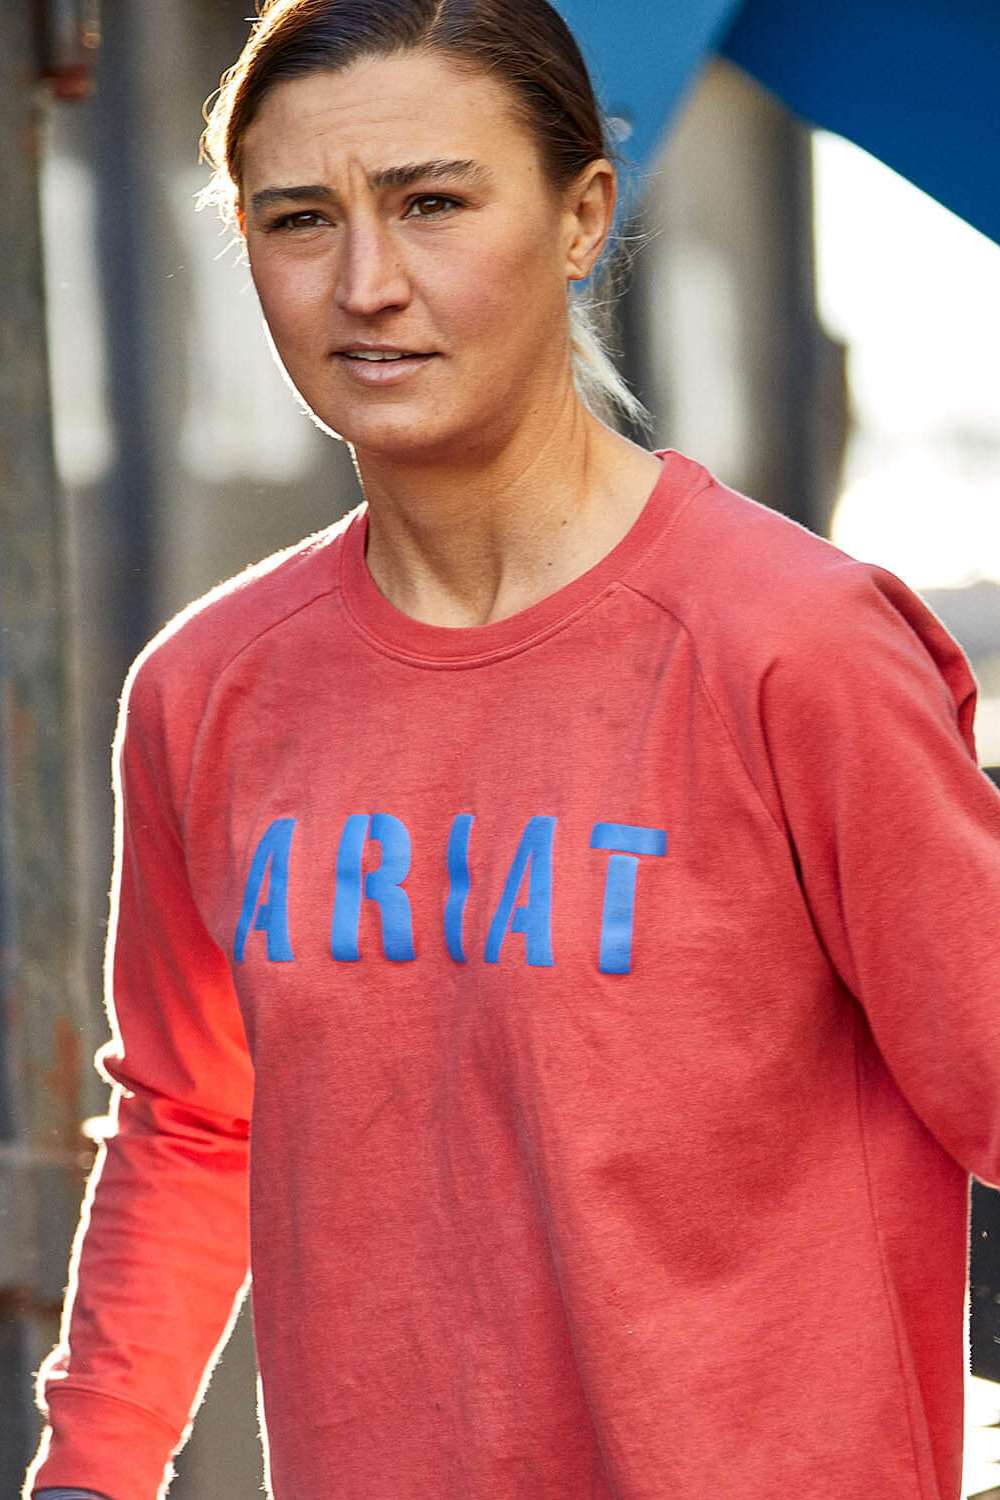 Ariat Rebar Ladies CottonStrong Block T-Shirt in Baked Apple/True Navy 